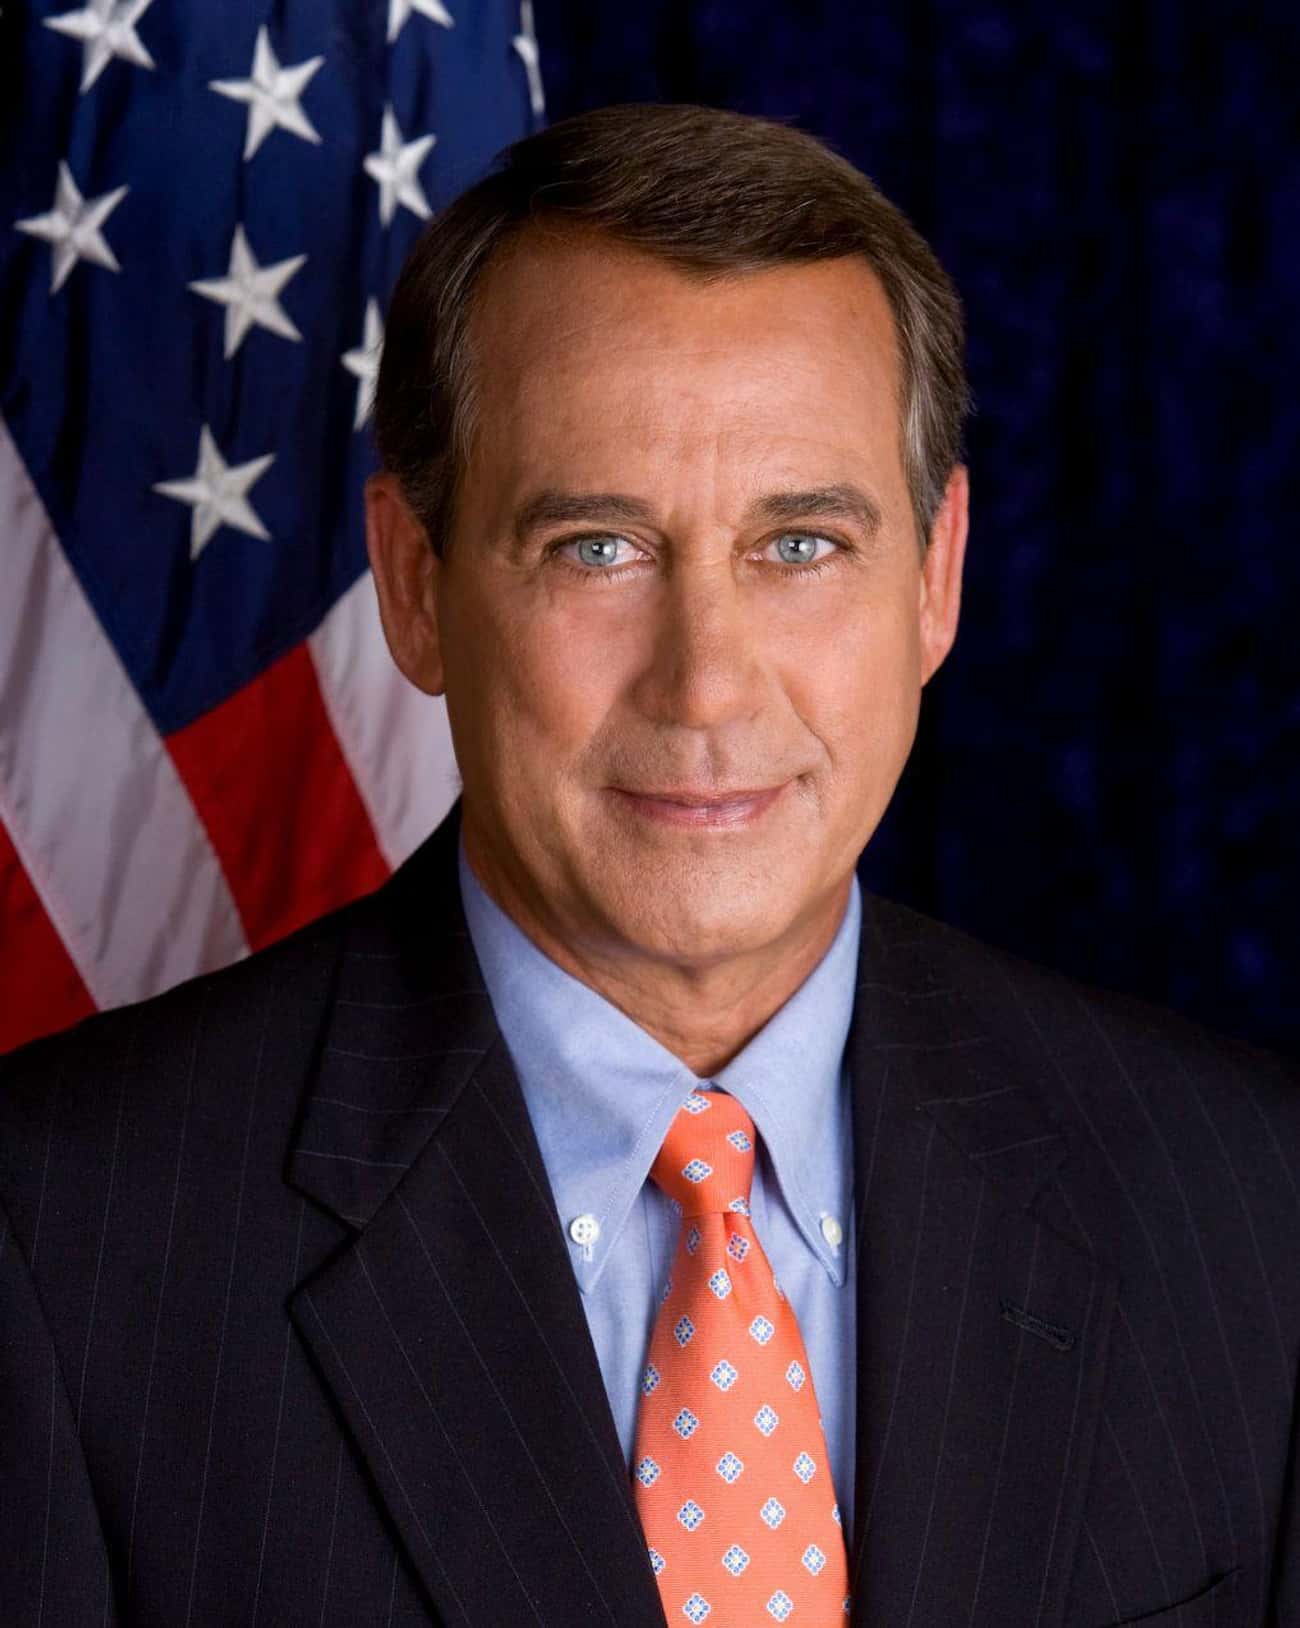 John Boehner Openly Handed Out Lobbyist Money